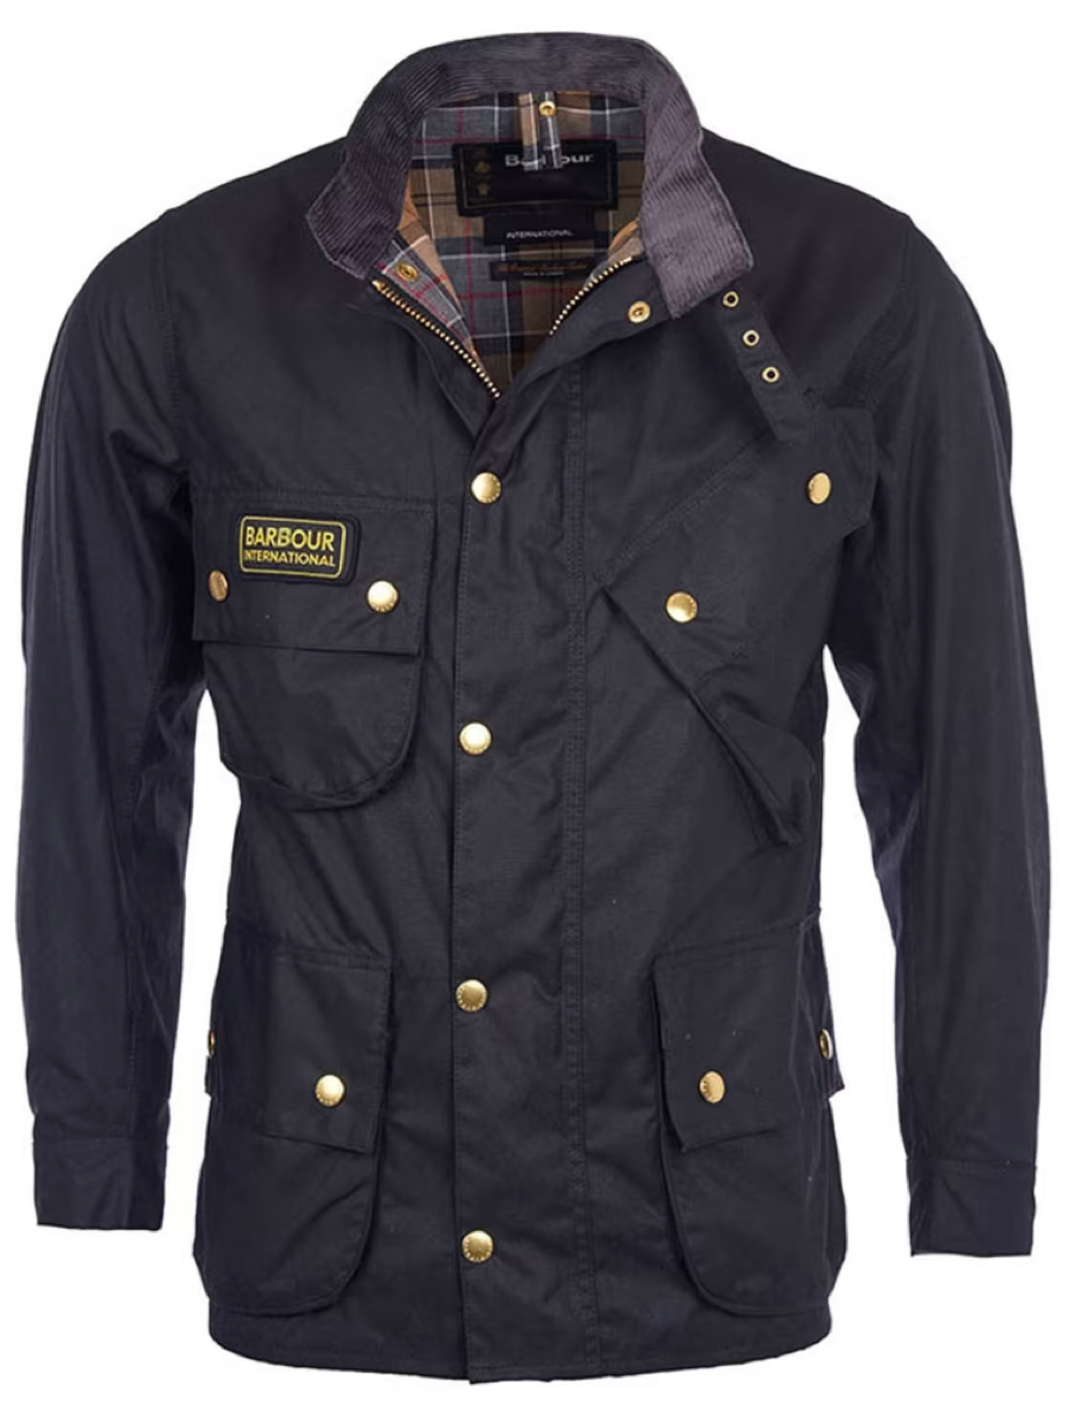 Men's Barbour International Waxed Jacket